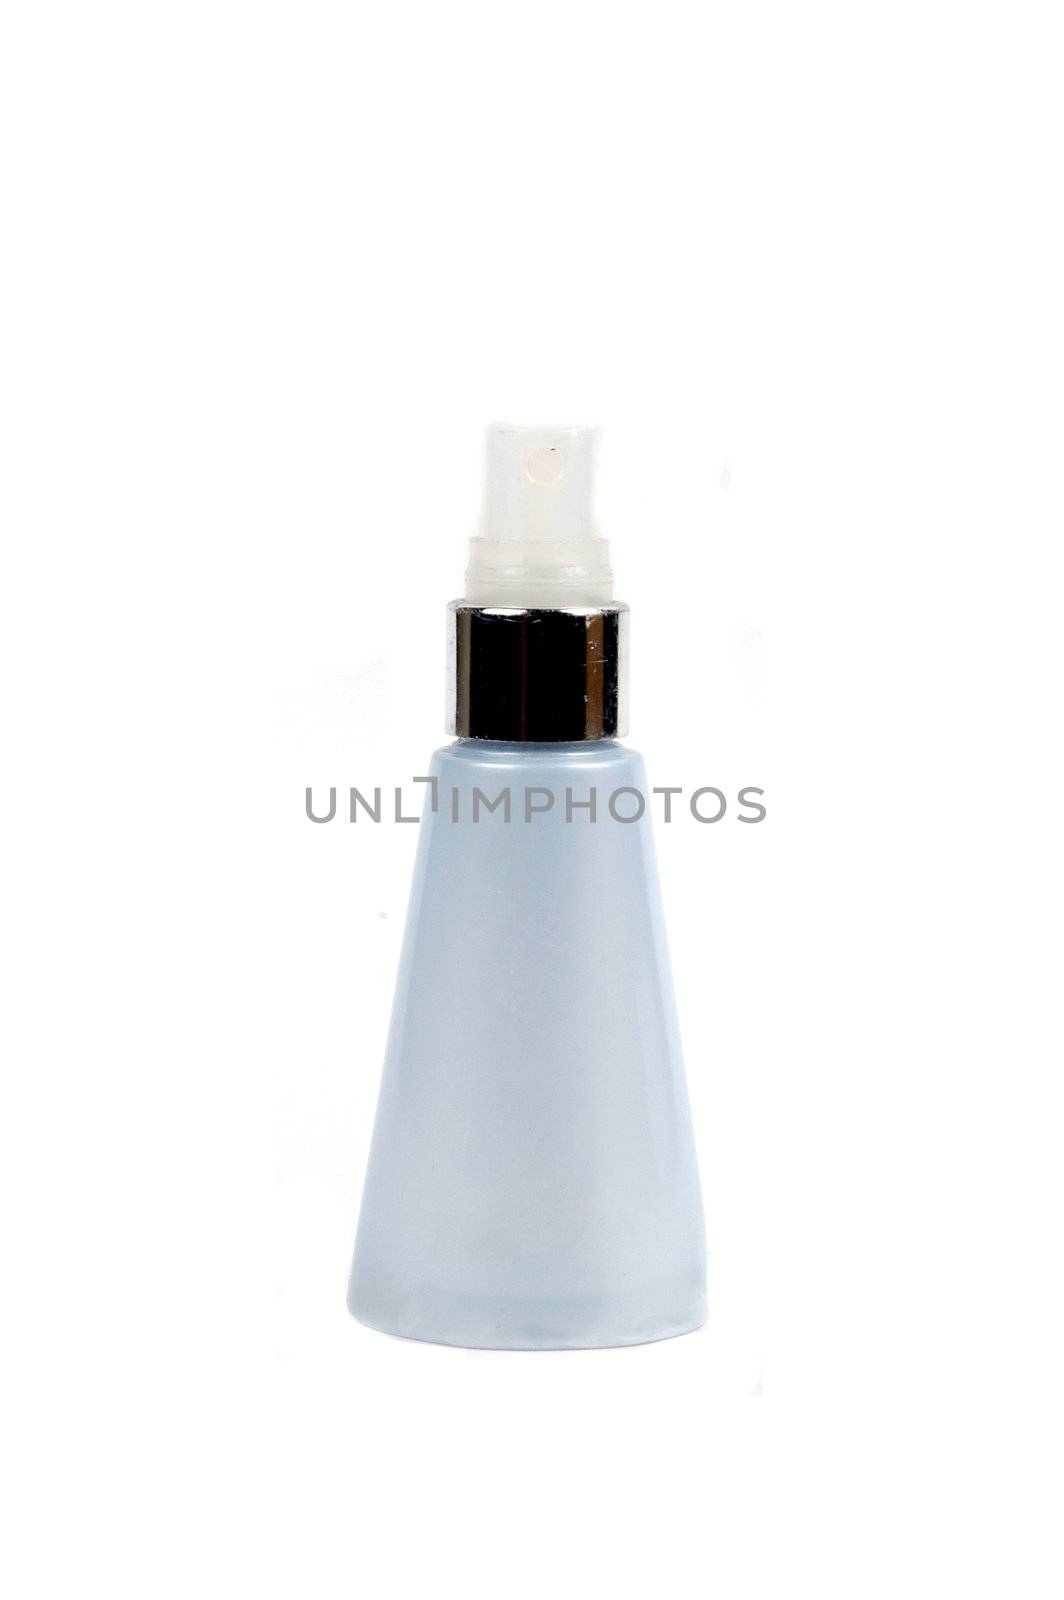 spray perfume bottle by antonihalim